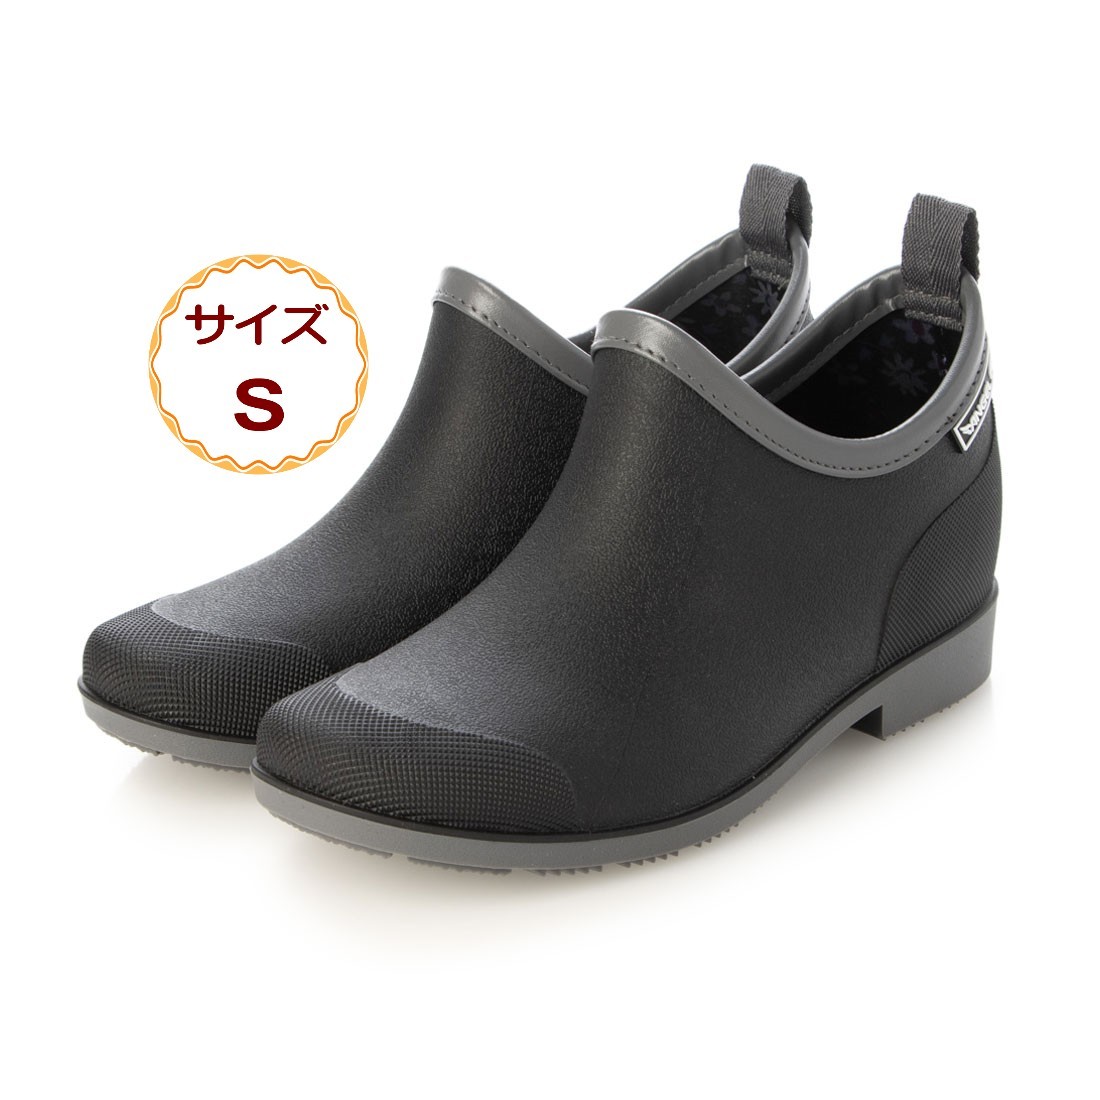  lady's rain short boots rain shoes boots rain shoes complete waterproof . slide bottom anti-bacterial deodorization light weight black 23029-blk-s ( 23.0 - 23.5 )